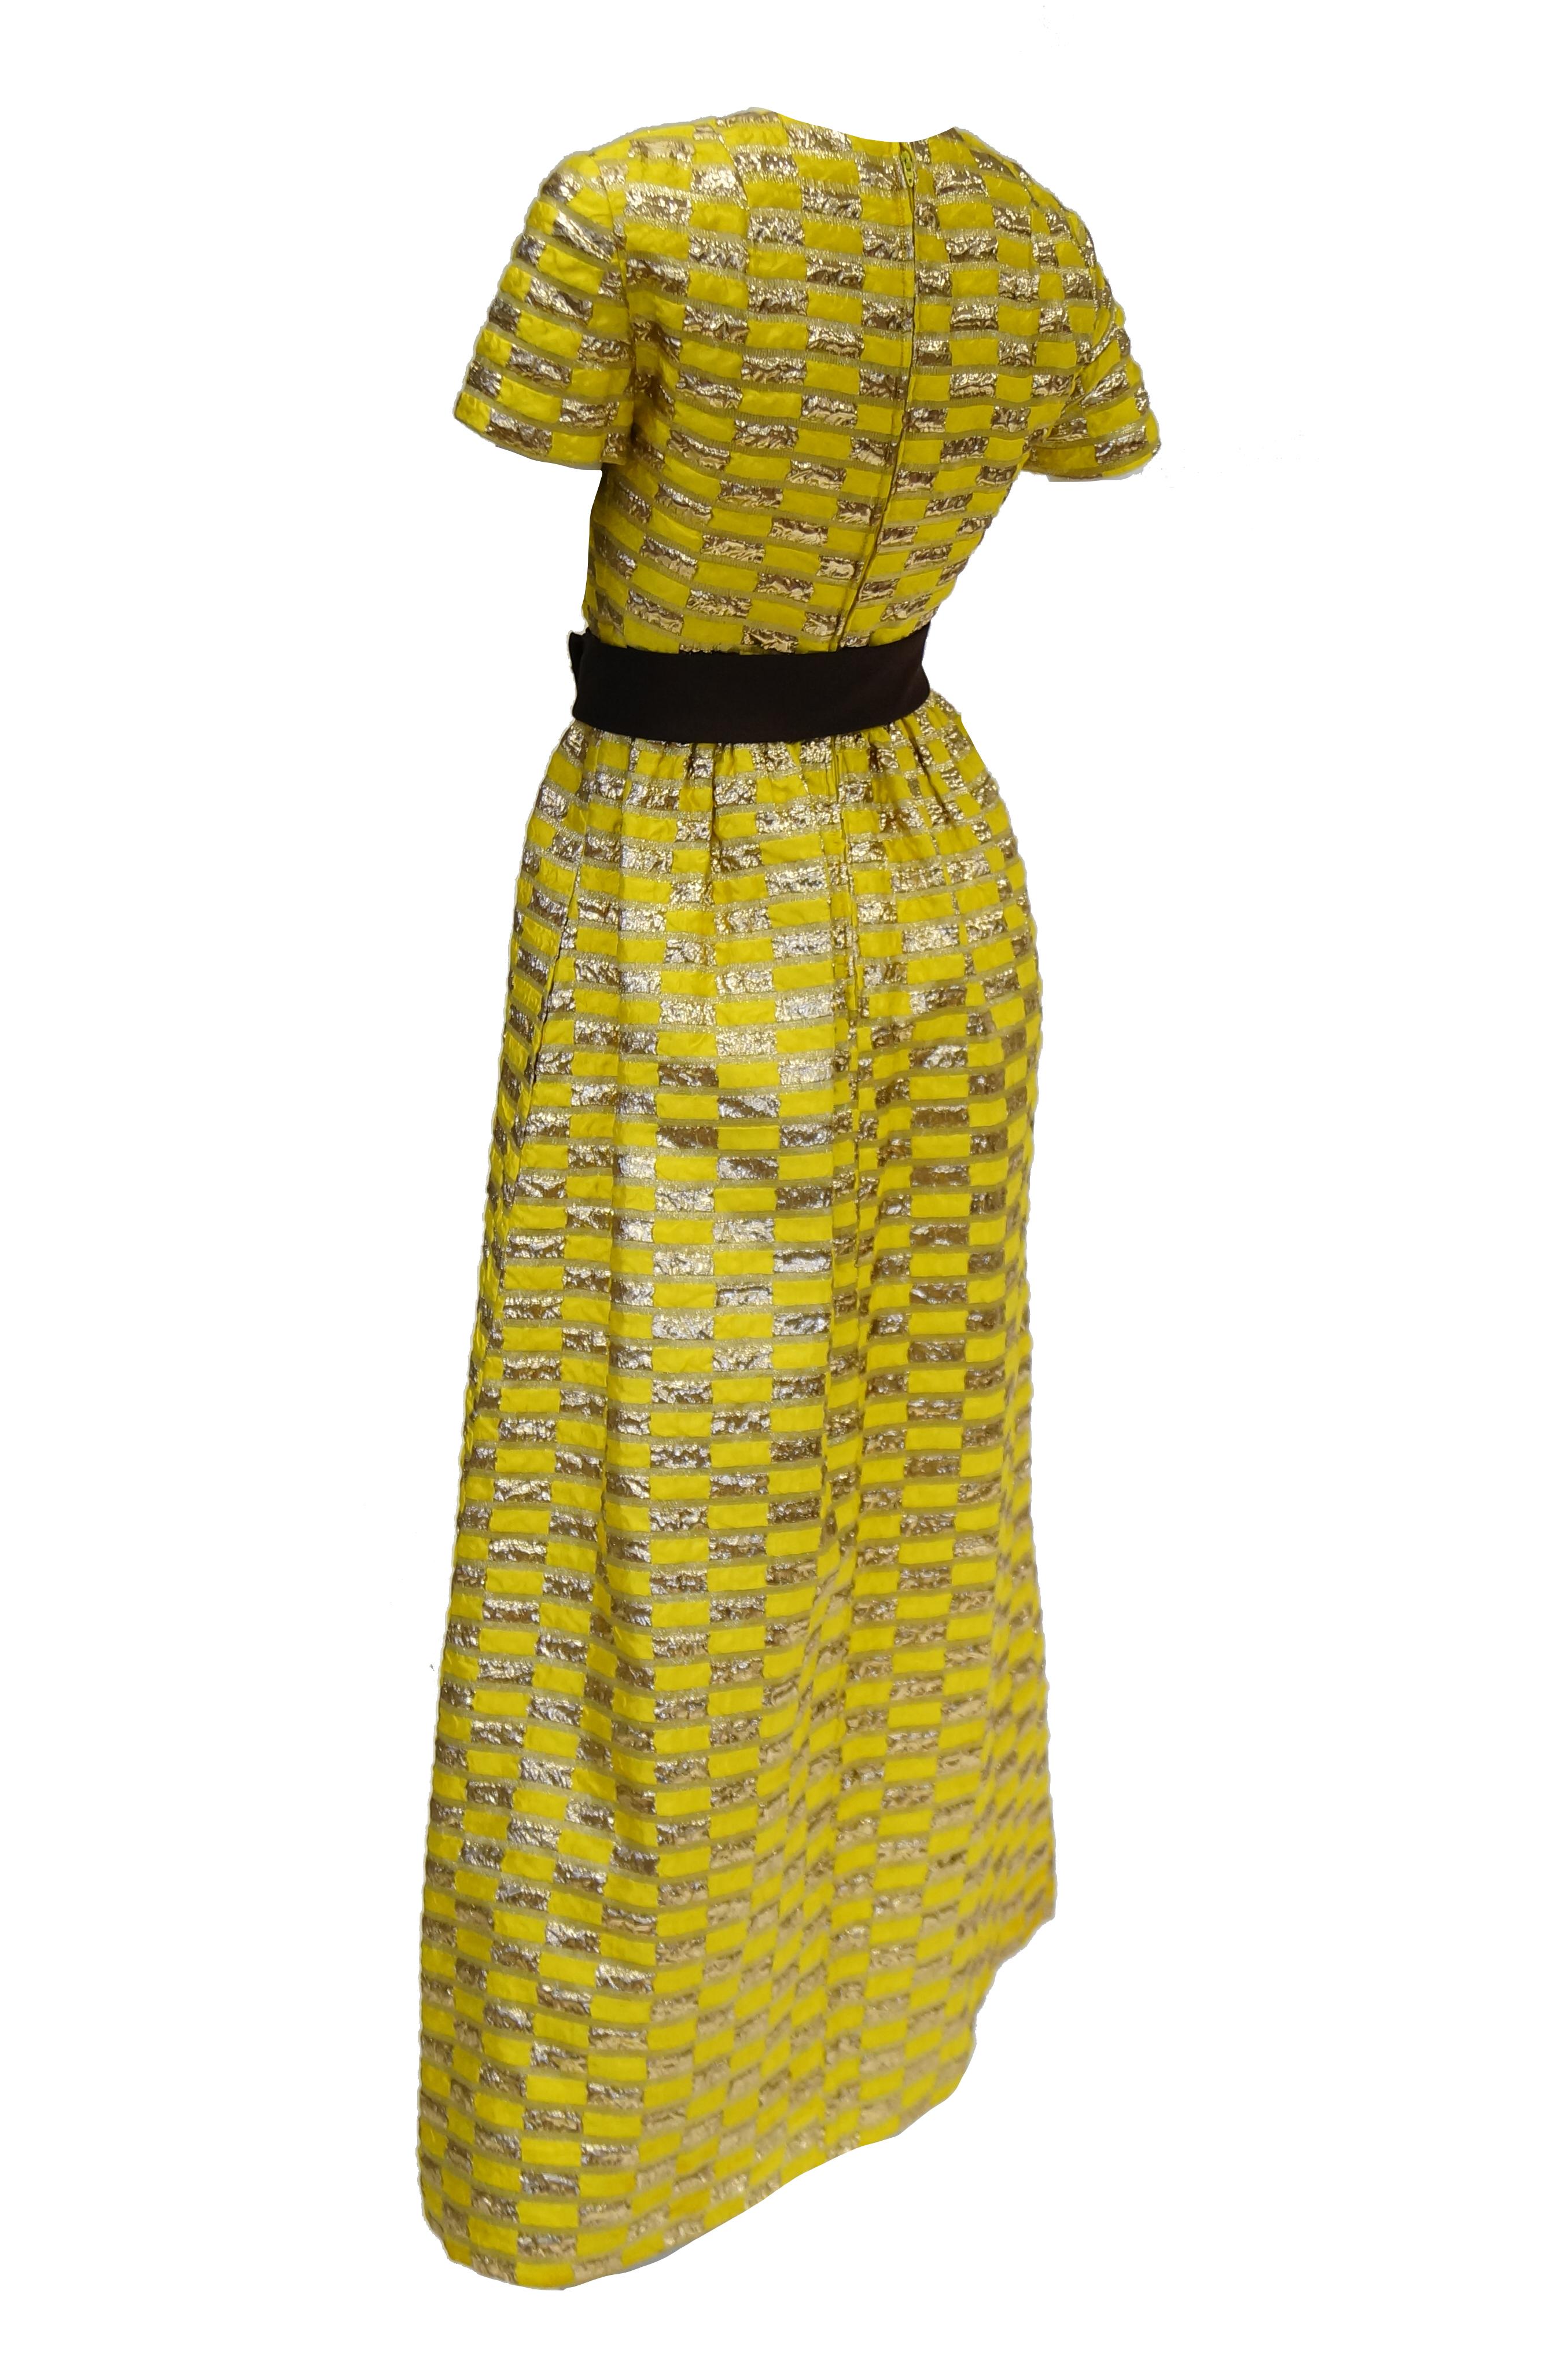 oscar de la renta yellow dress